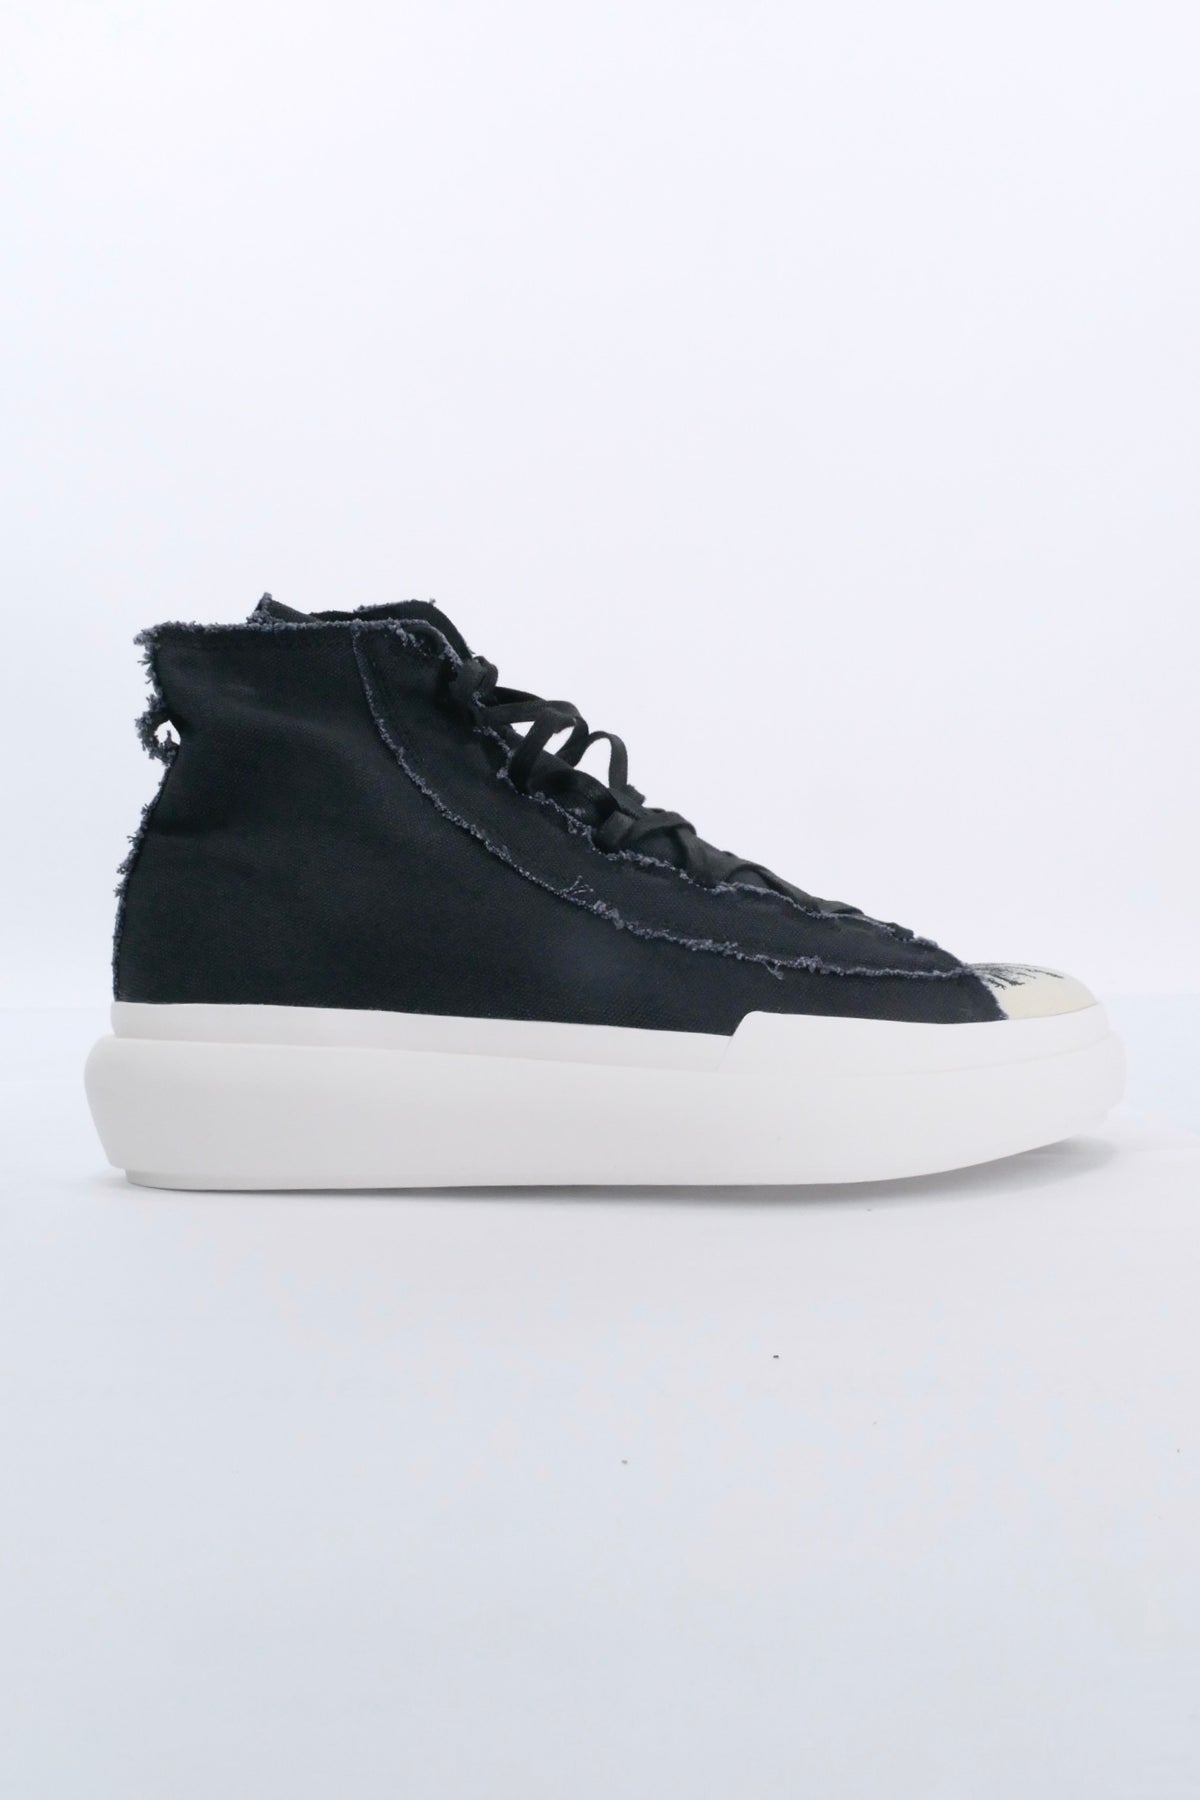 Y-3 Nizza High Sneakers - Black/White